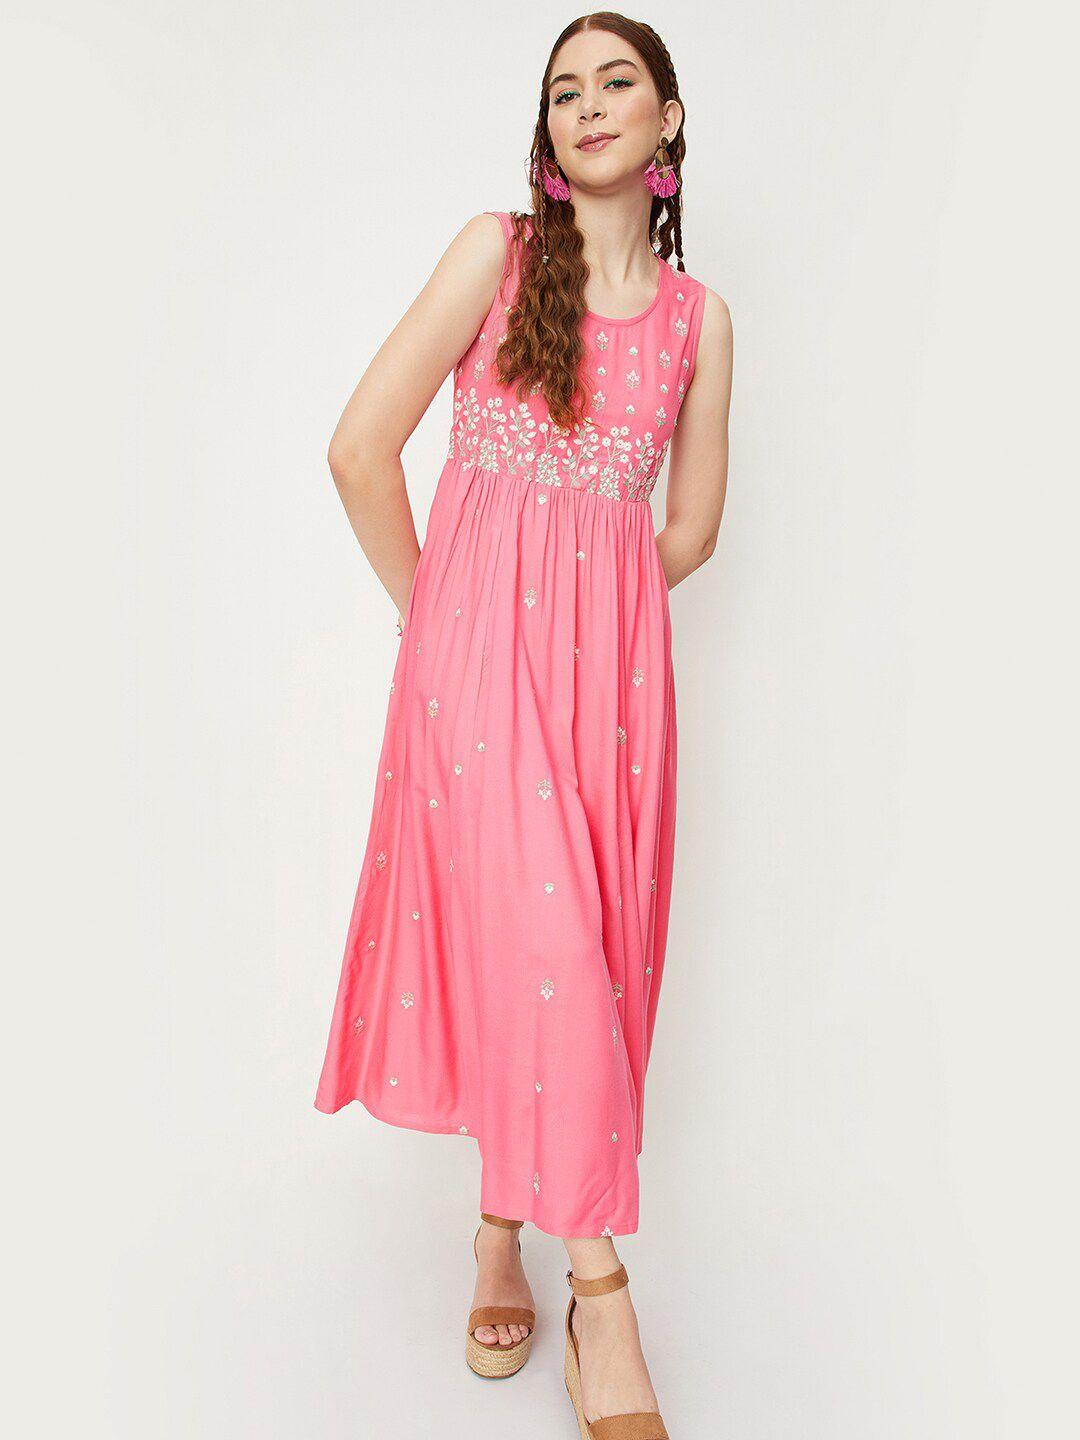 max-pink-embellished-maxi-dress